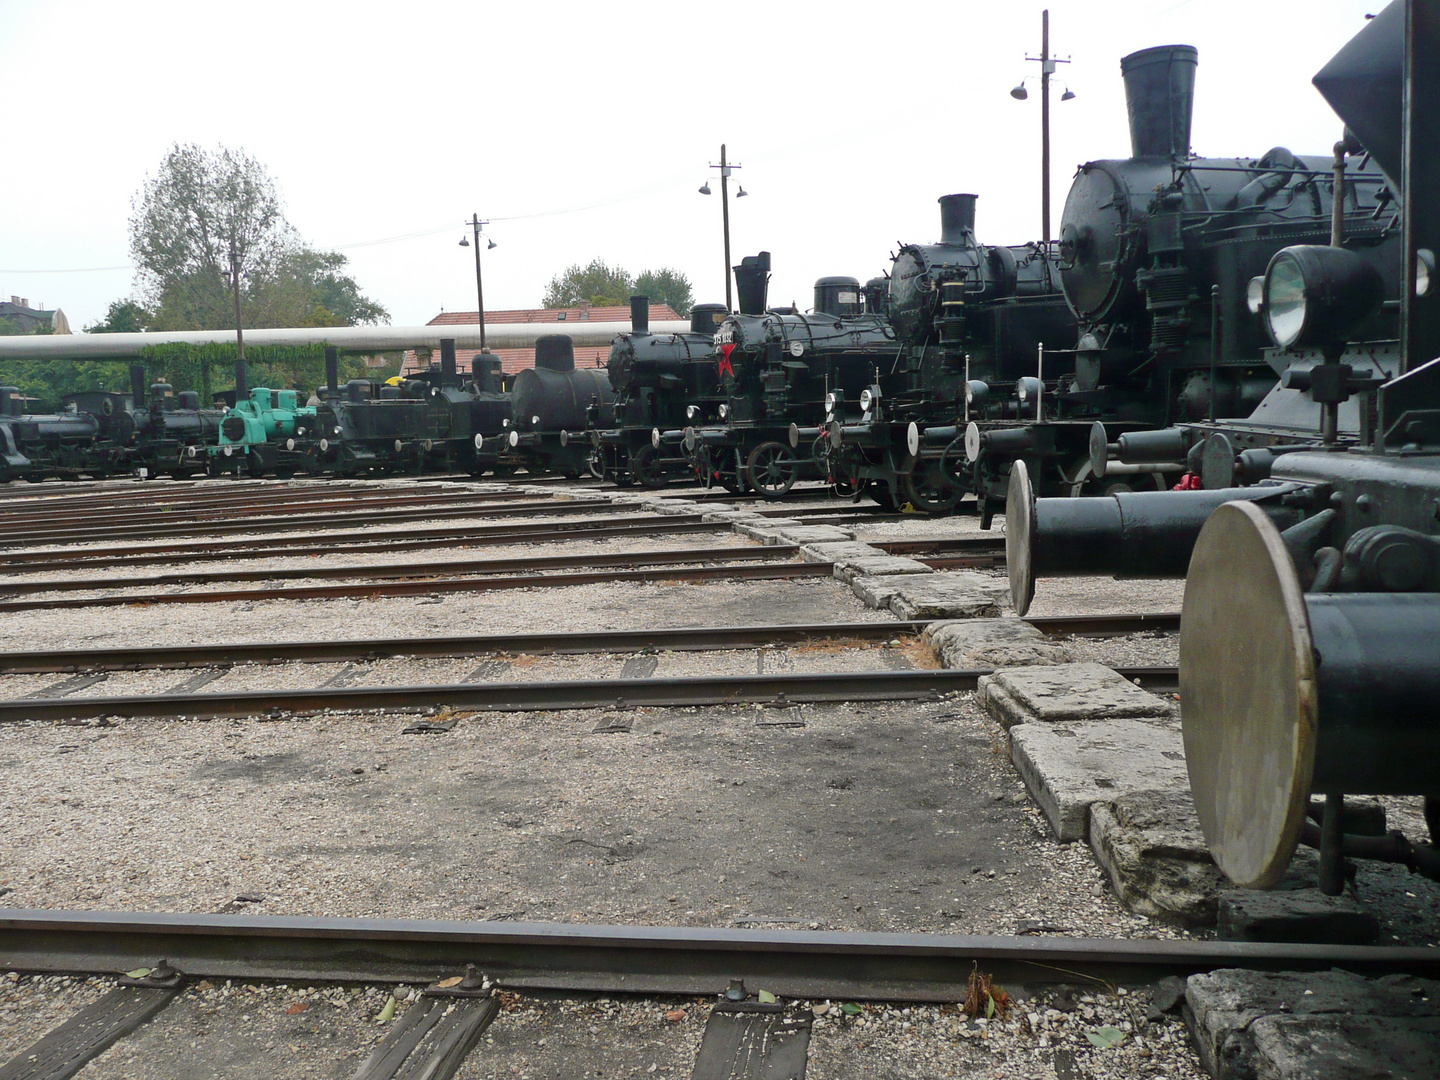 Besuch im Budapester Eisenbahnmuseum